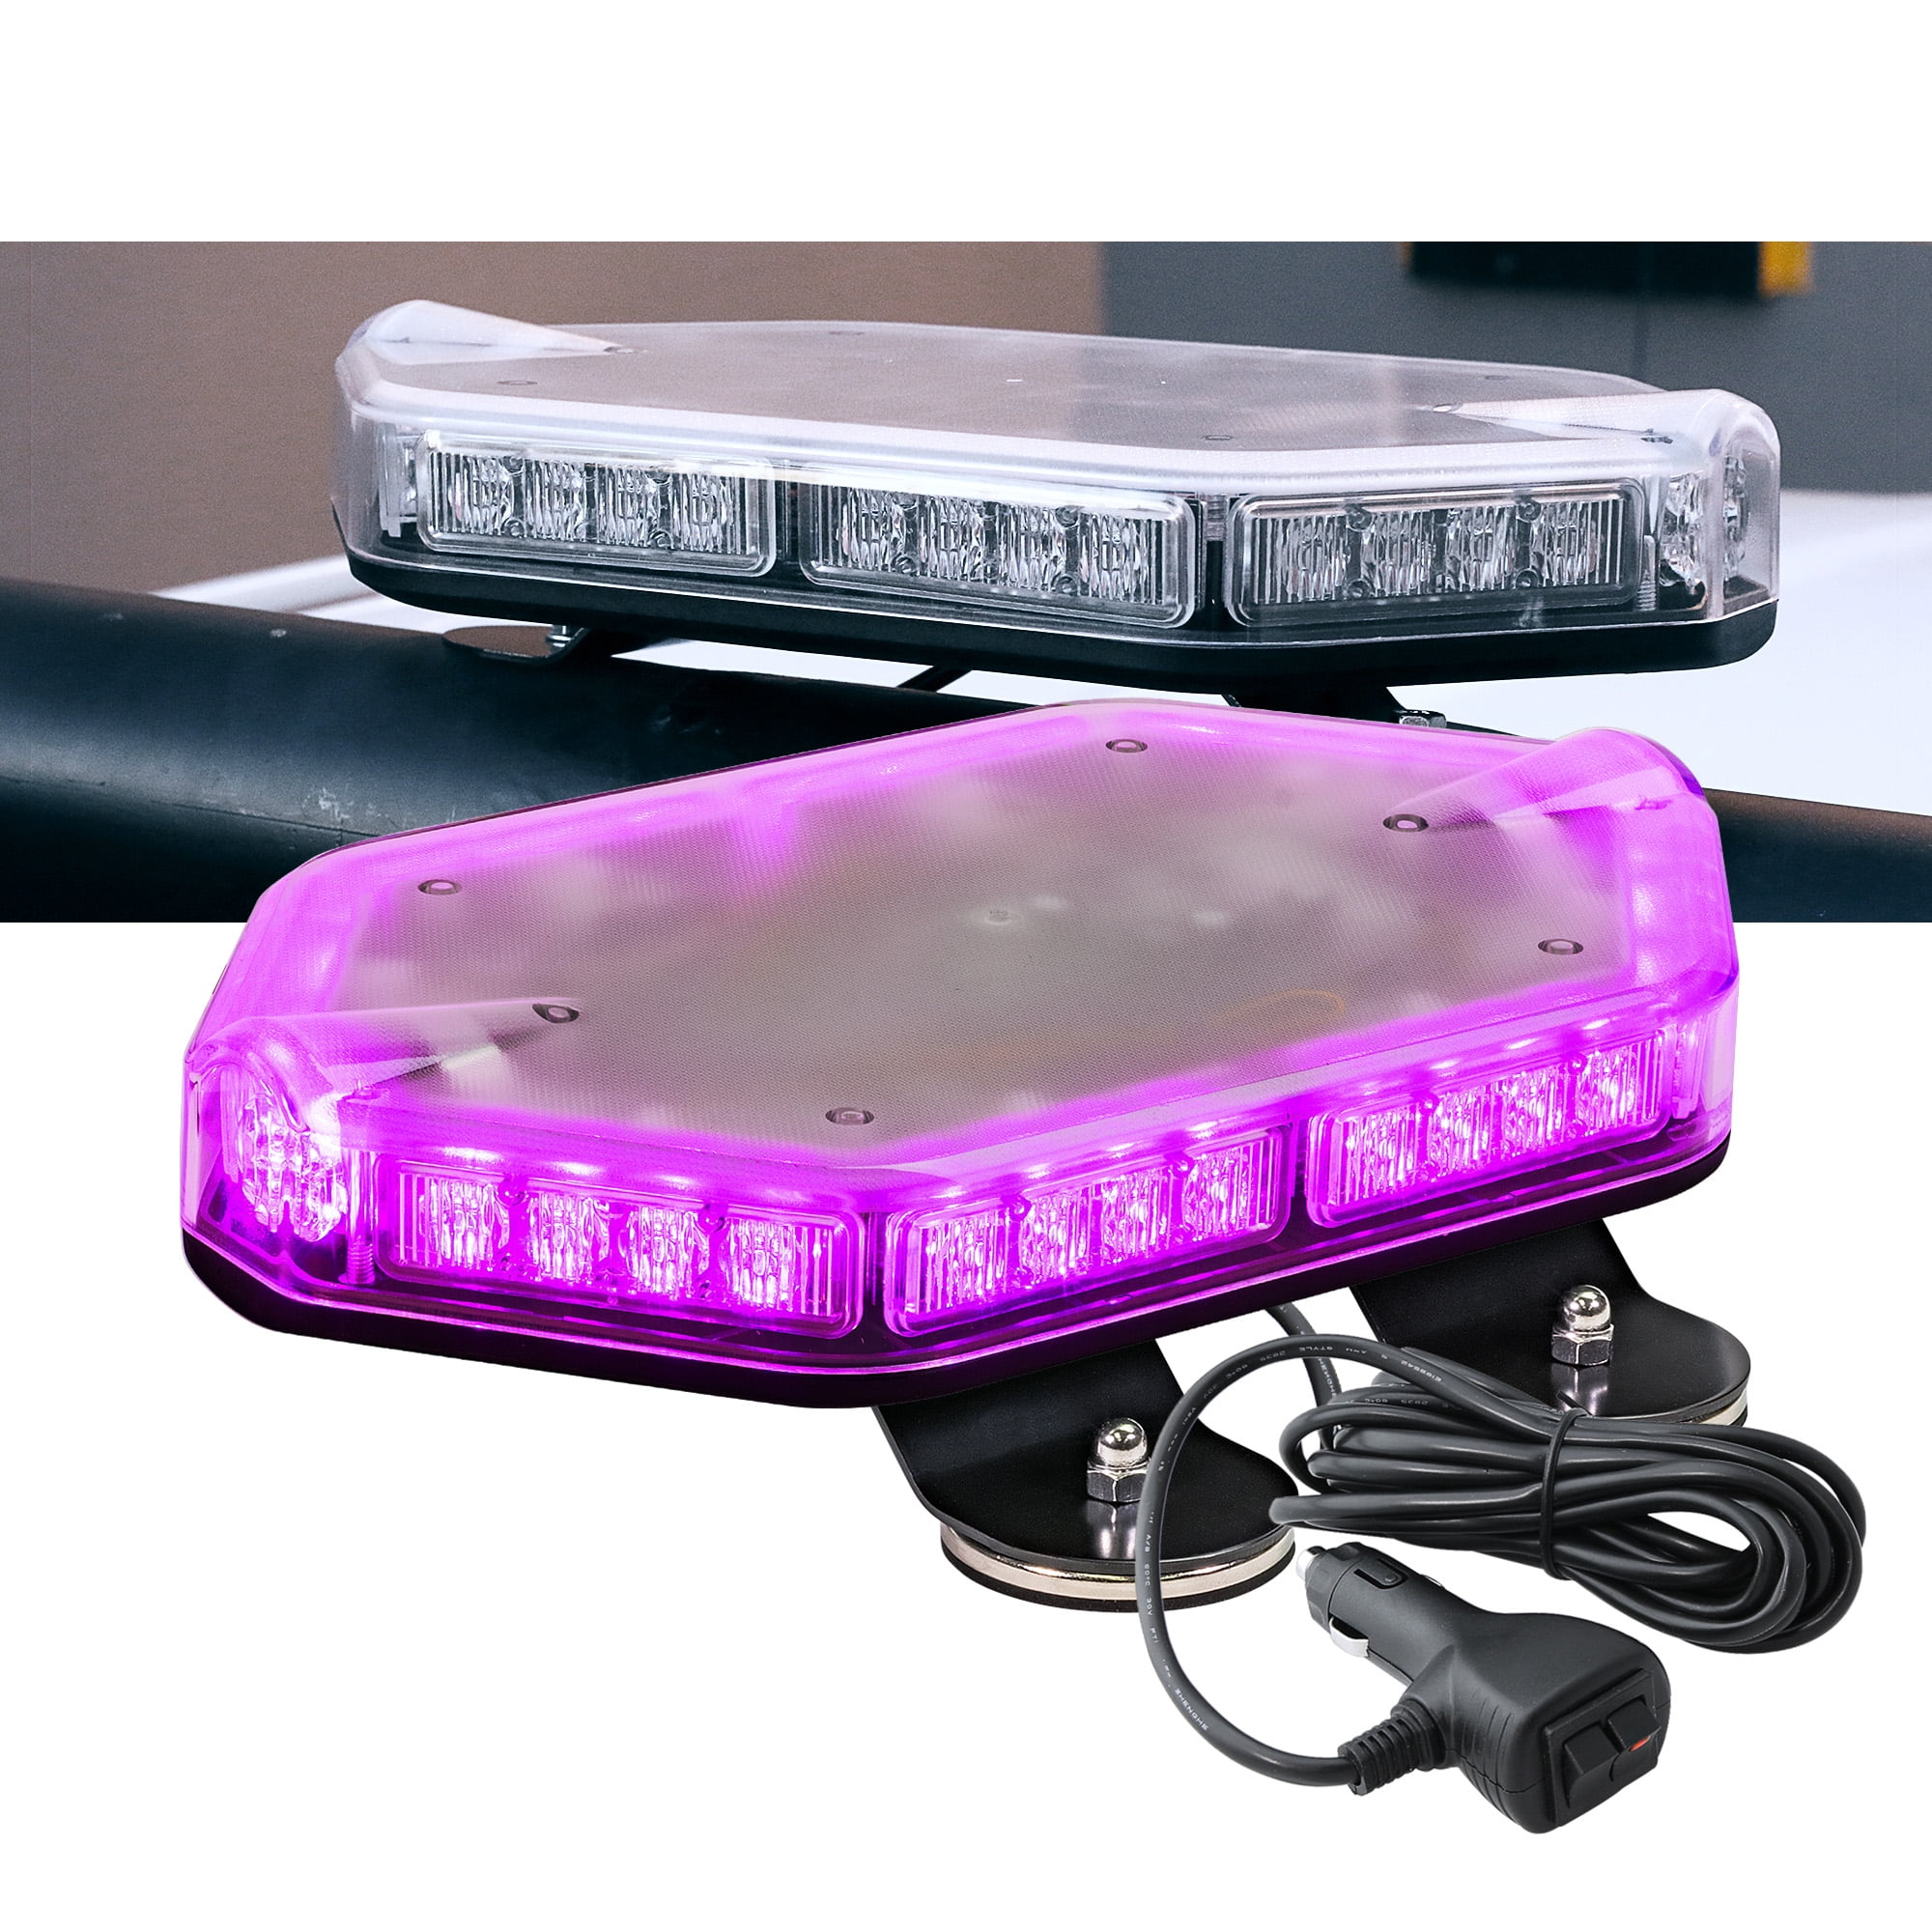 VSEK 26.5 Amber/White 54 LED Traffic Advisor Double Side Emergency Warning Flash Strobe Light with Magnetic Base